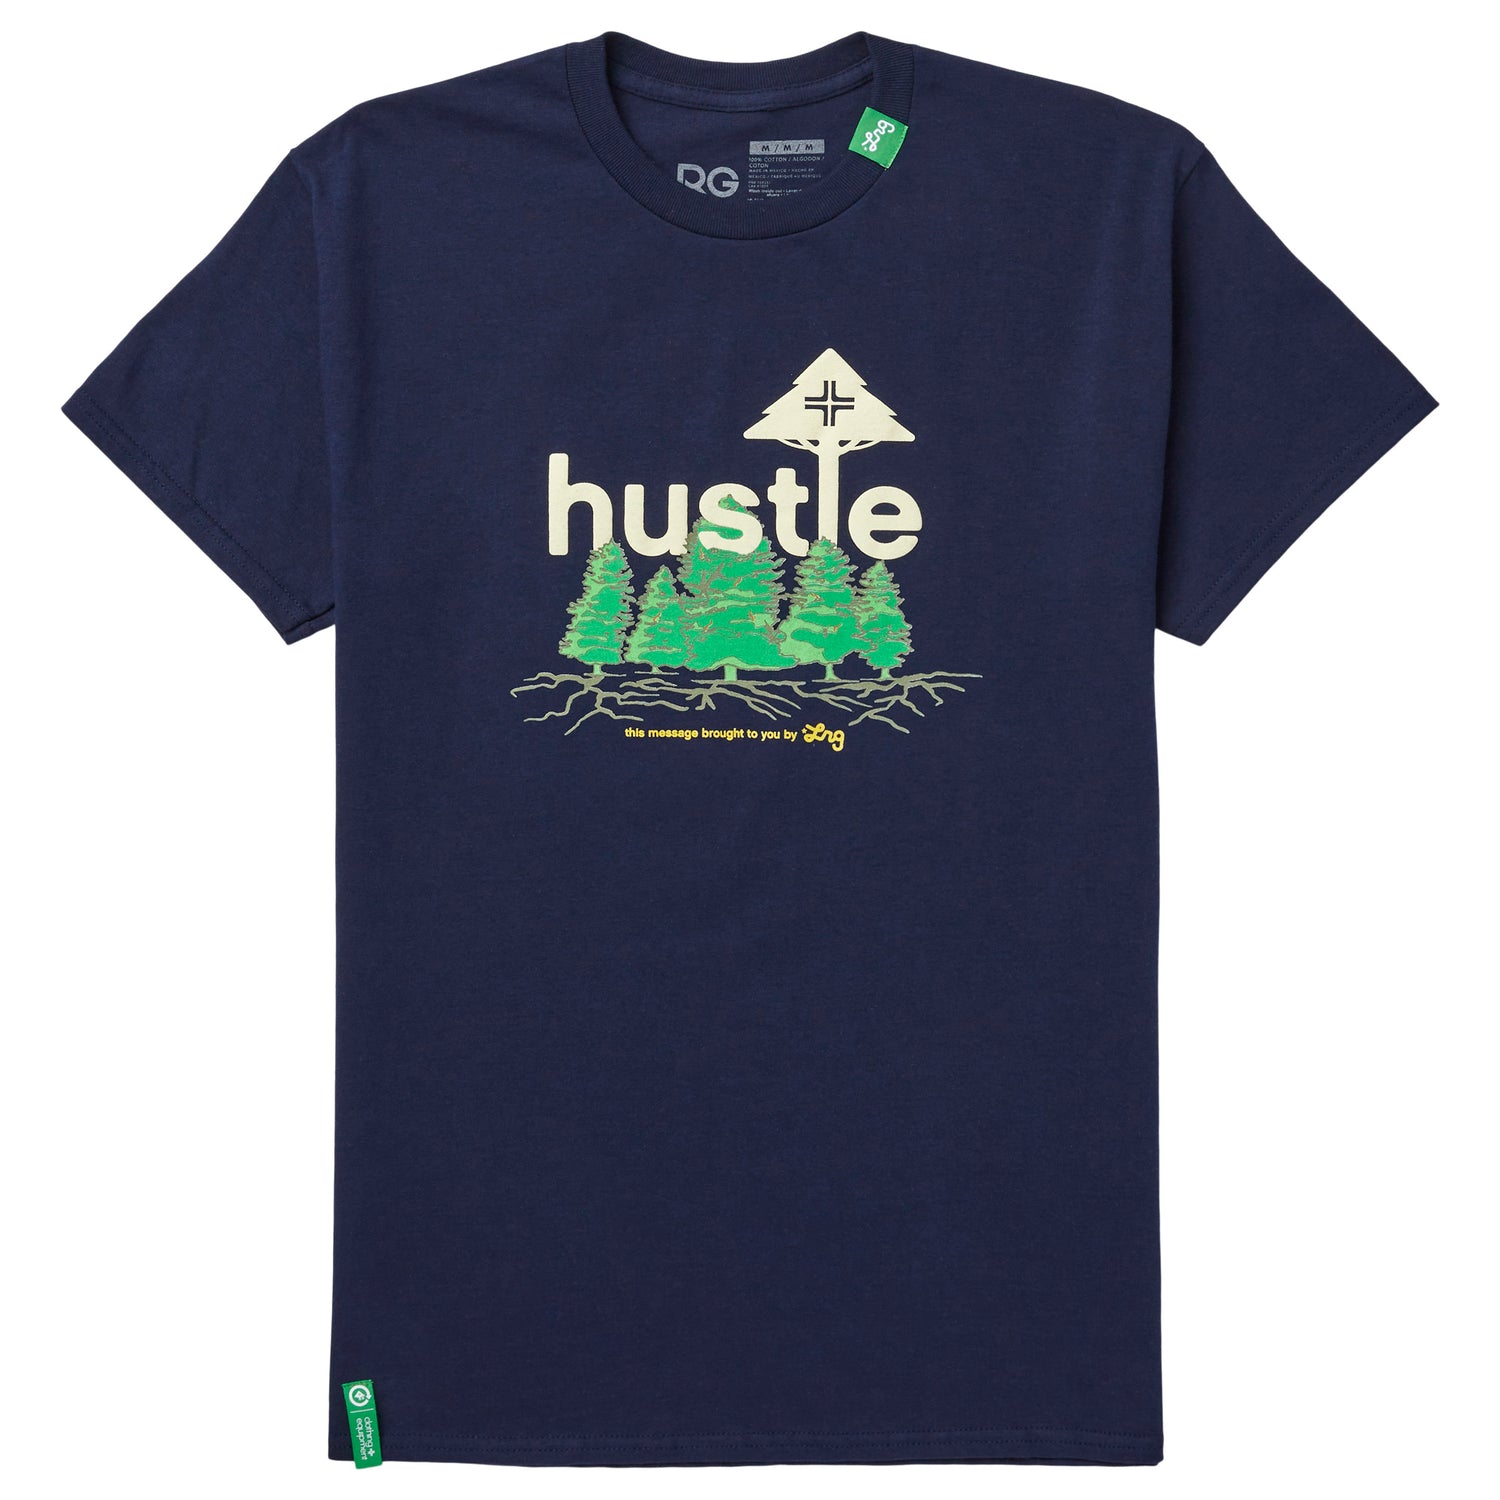 Hustle Fashion Online Store, Online Shop